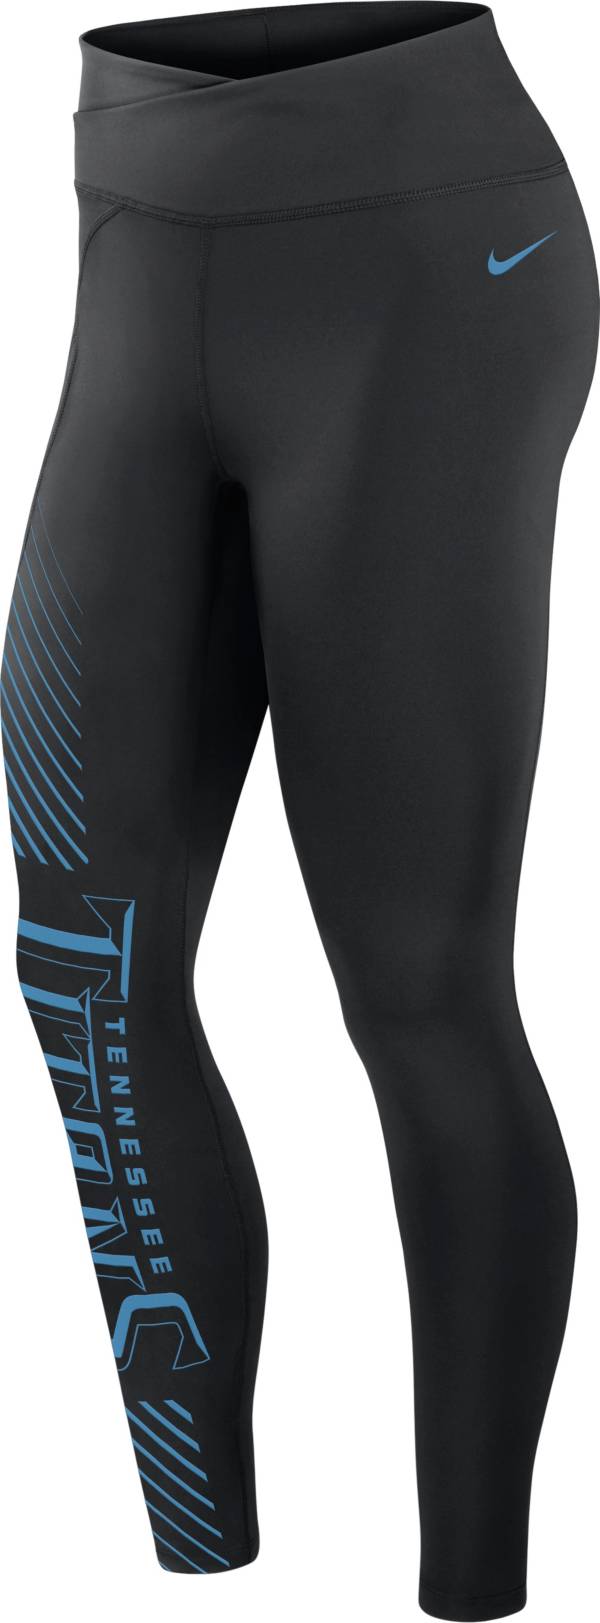 Nike Women's Tennessee Titans Yard Line Black Leggings product image